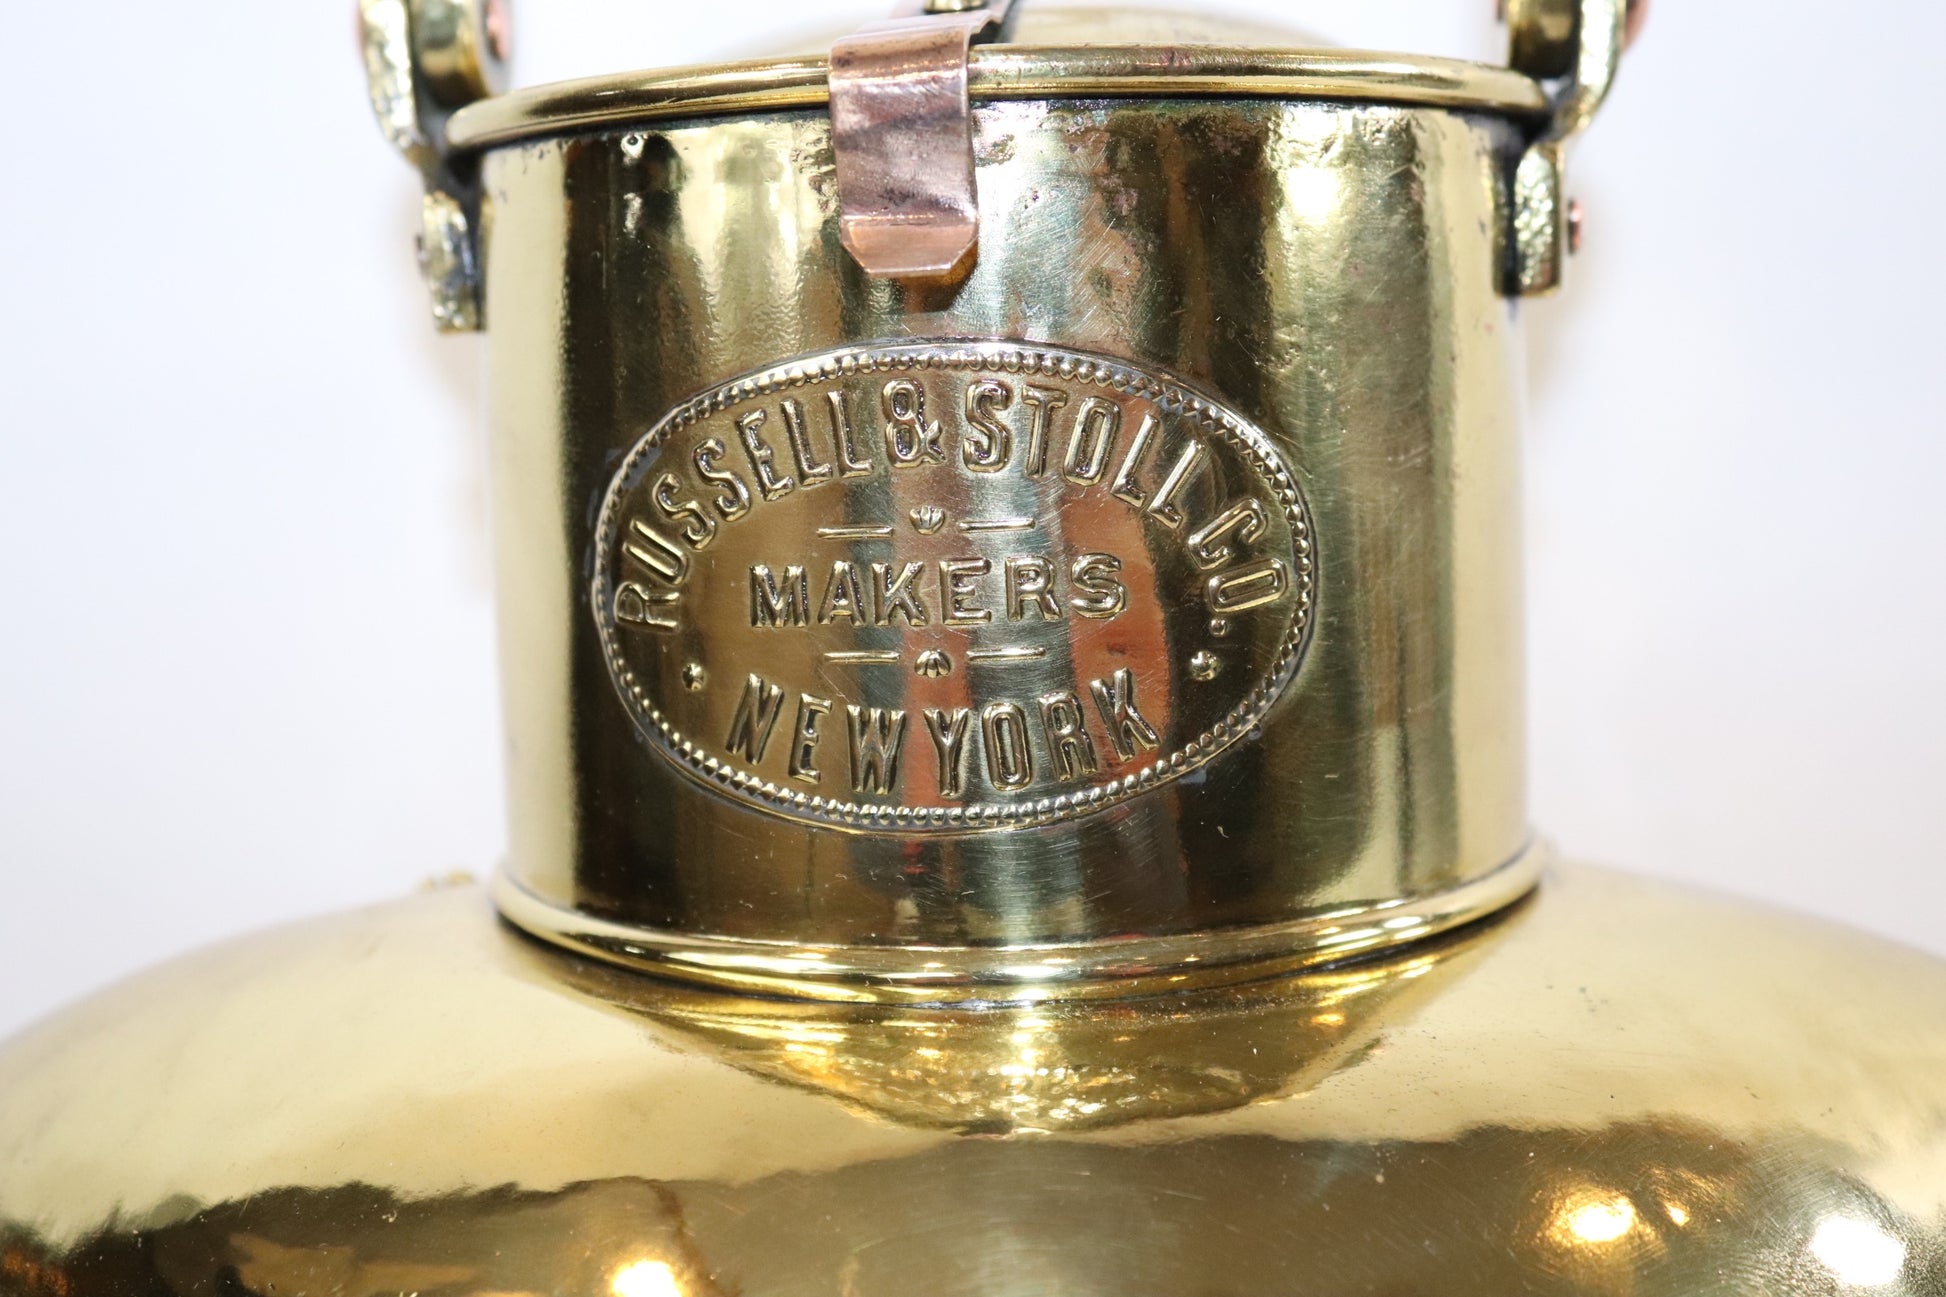 Russell Stoll Brass Ships Lantern - Lannan Gallery